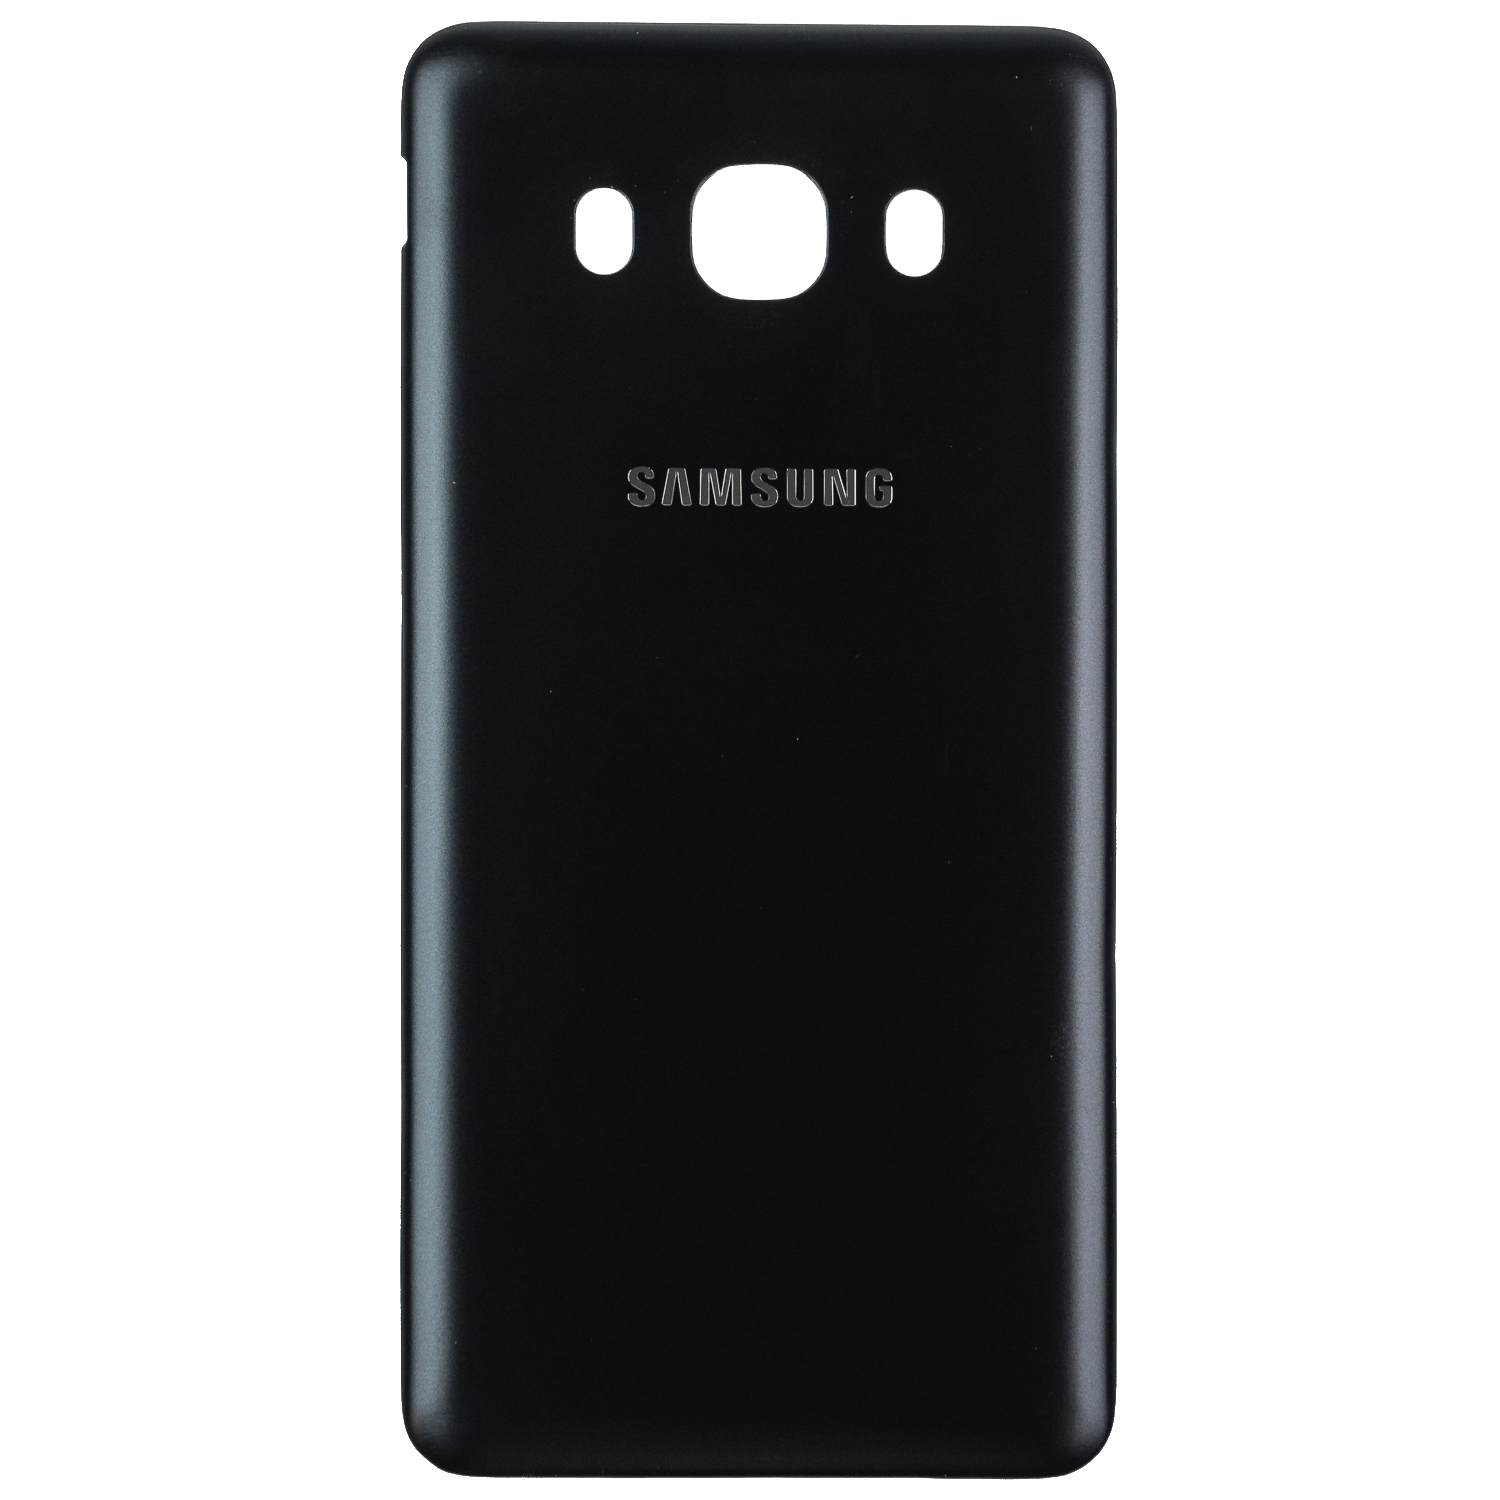 stil meer Ellendig Samsung Galaxy J5 2016 achterkant (origineel) kopen? - 10 jaar+ ervaring |  Partly